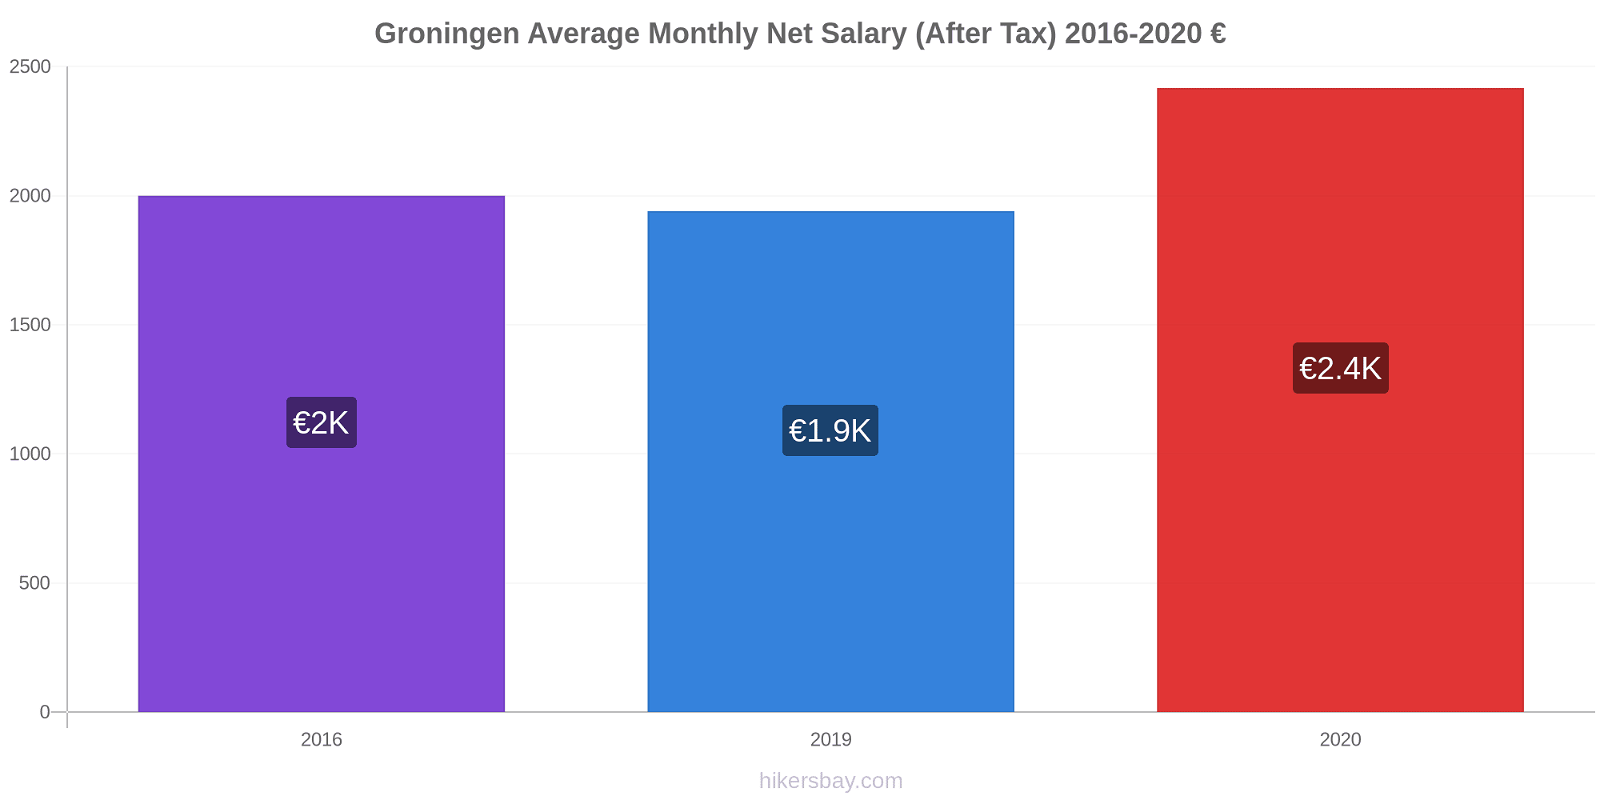 Groningen price changes Average Monthly Net Salary (After Tax) hikersbay.com